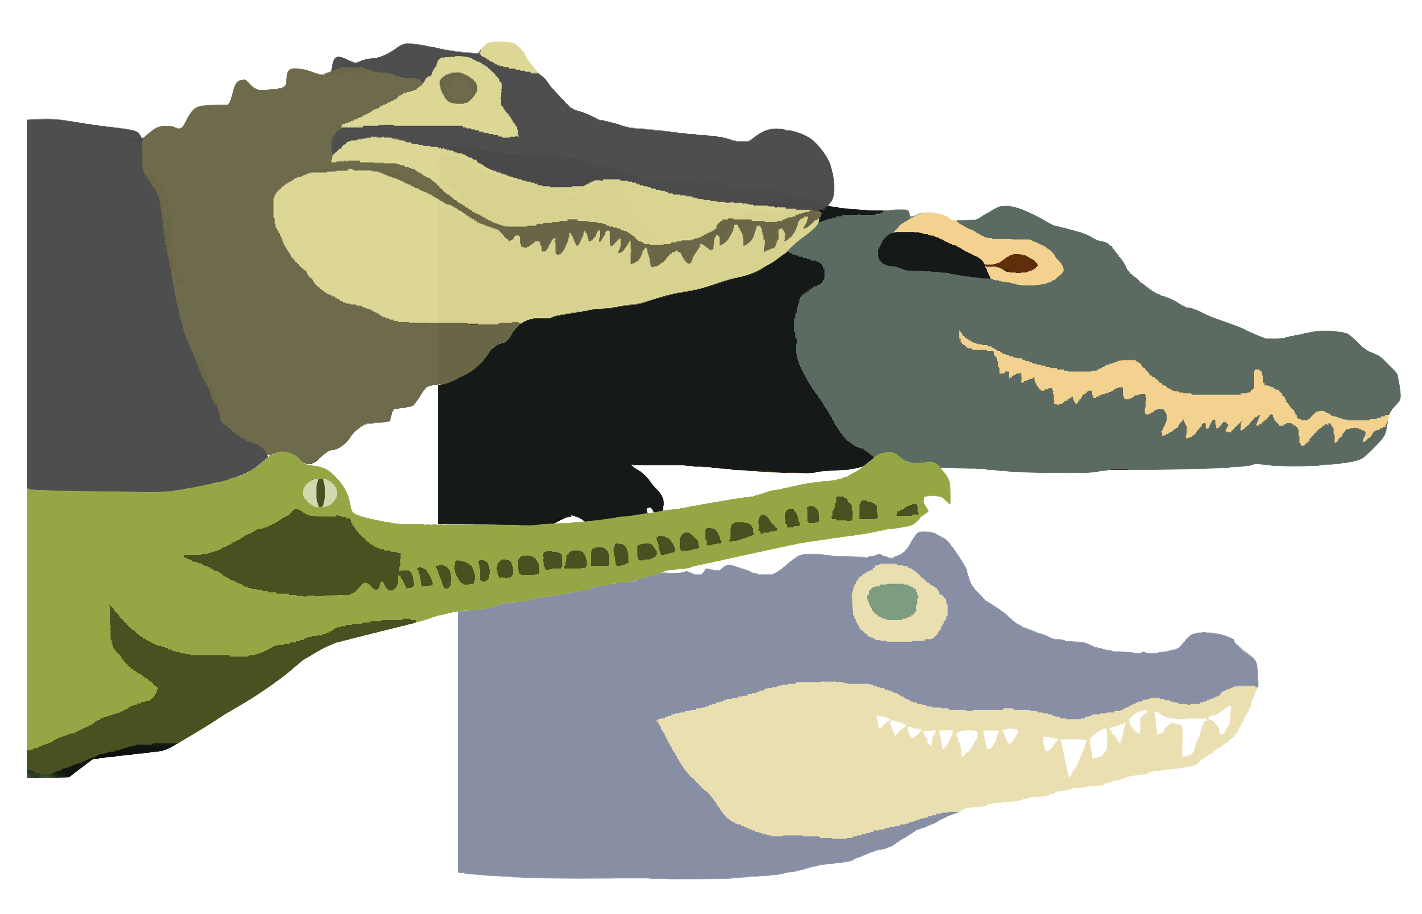 All Crocodile groups